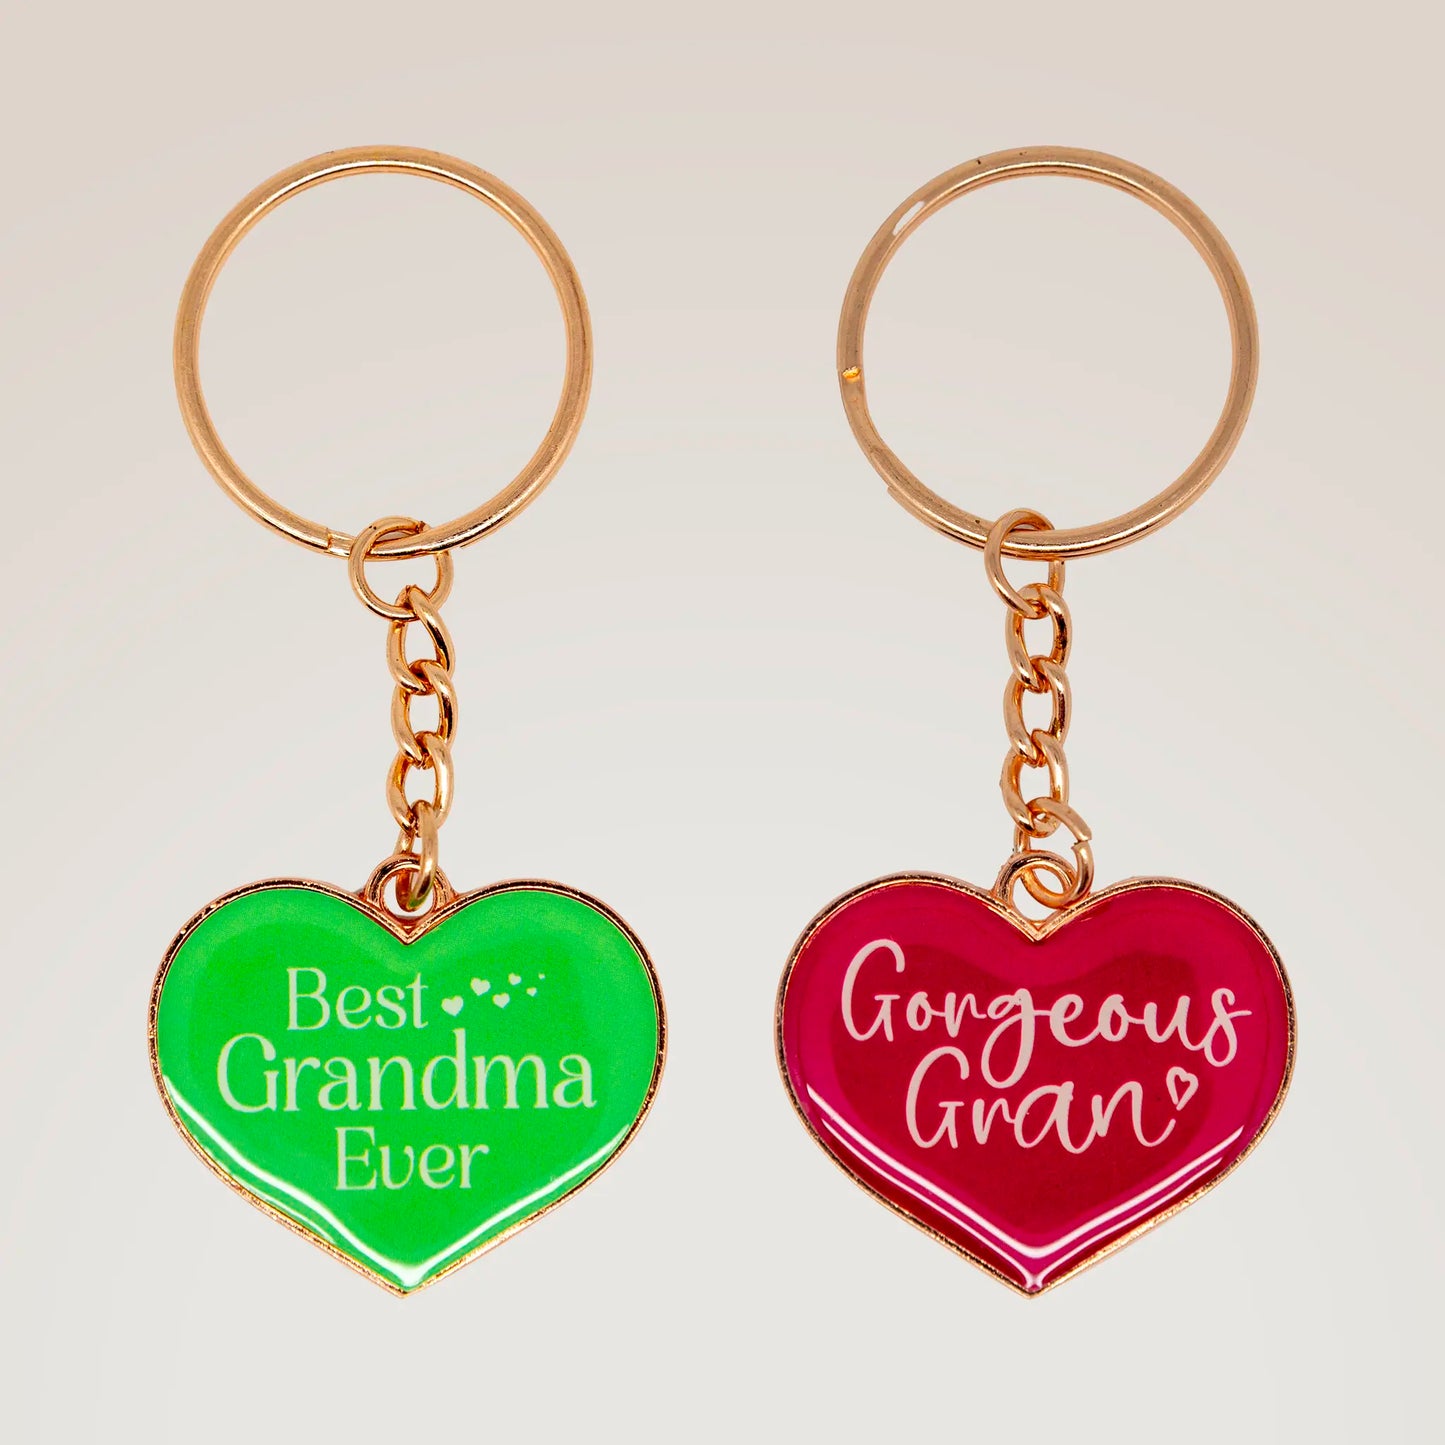 Heart Shaped Key Ring for Gran